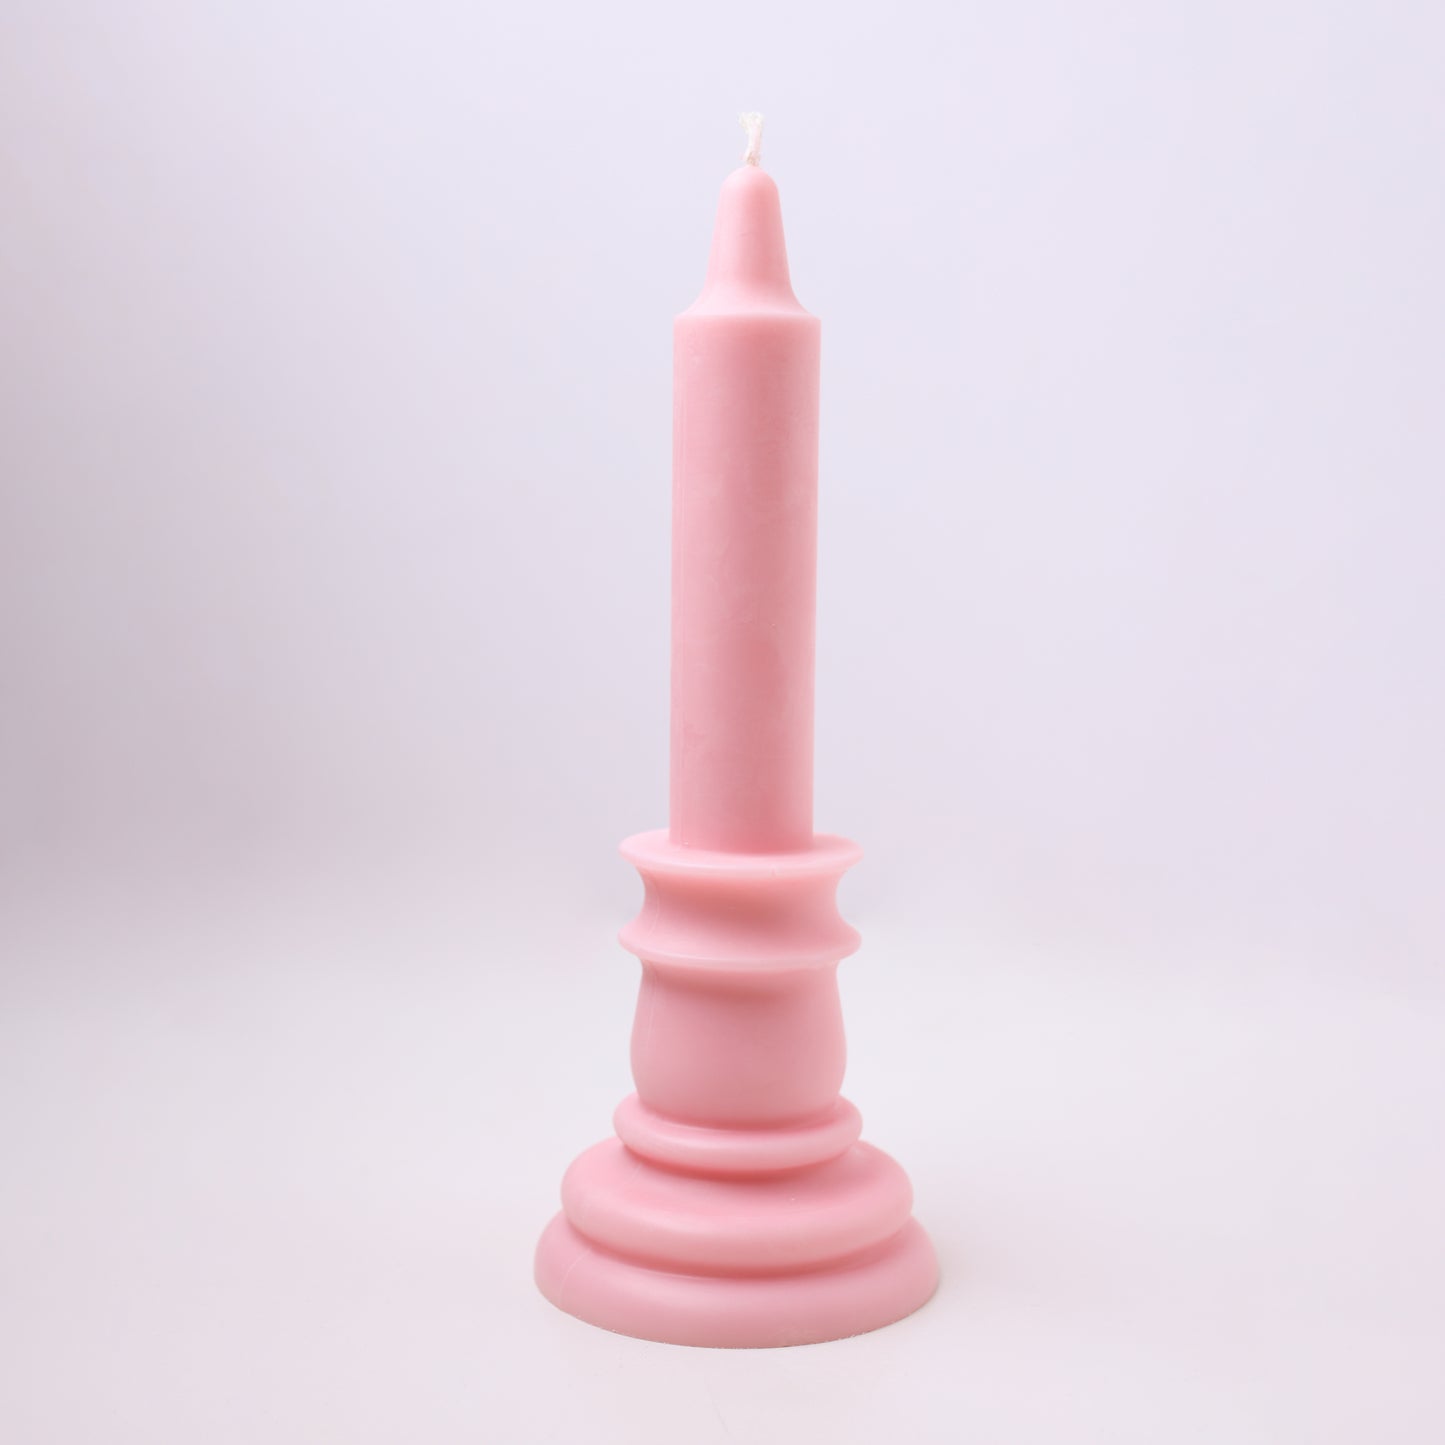 3altawleh Candle 20 cm Pink